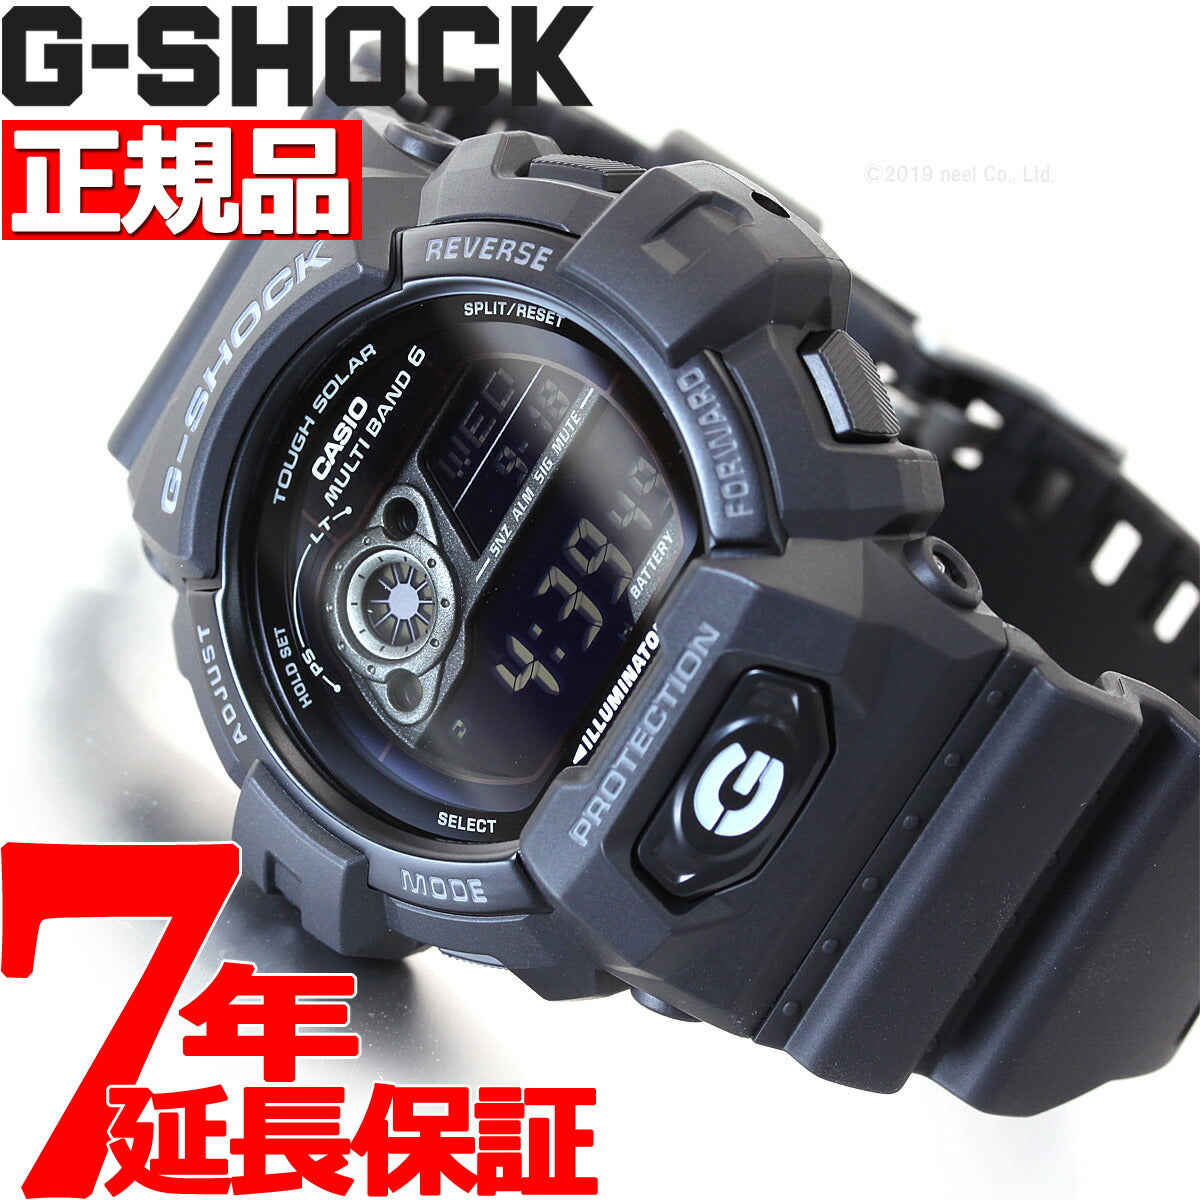 G-SHOCK 電波 ソーラー 電波時計 カシオ Gショック 腕時計 メンズ タフソーラー GW-8900A-1JF